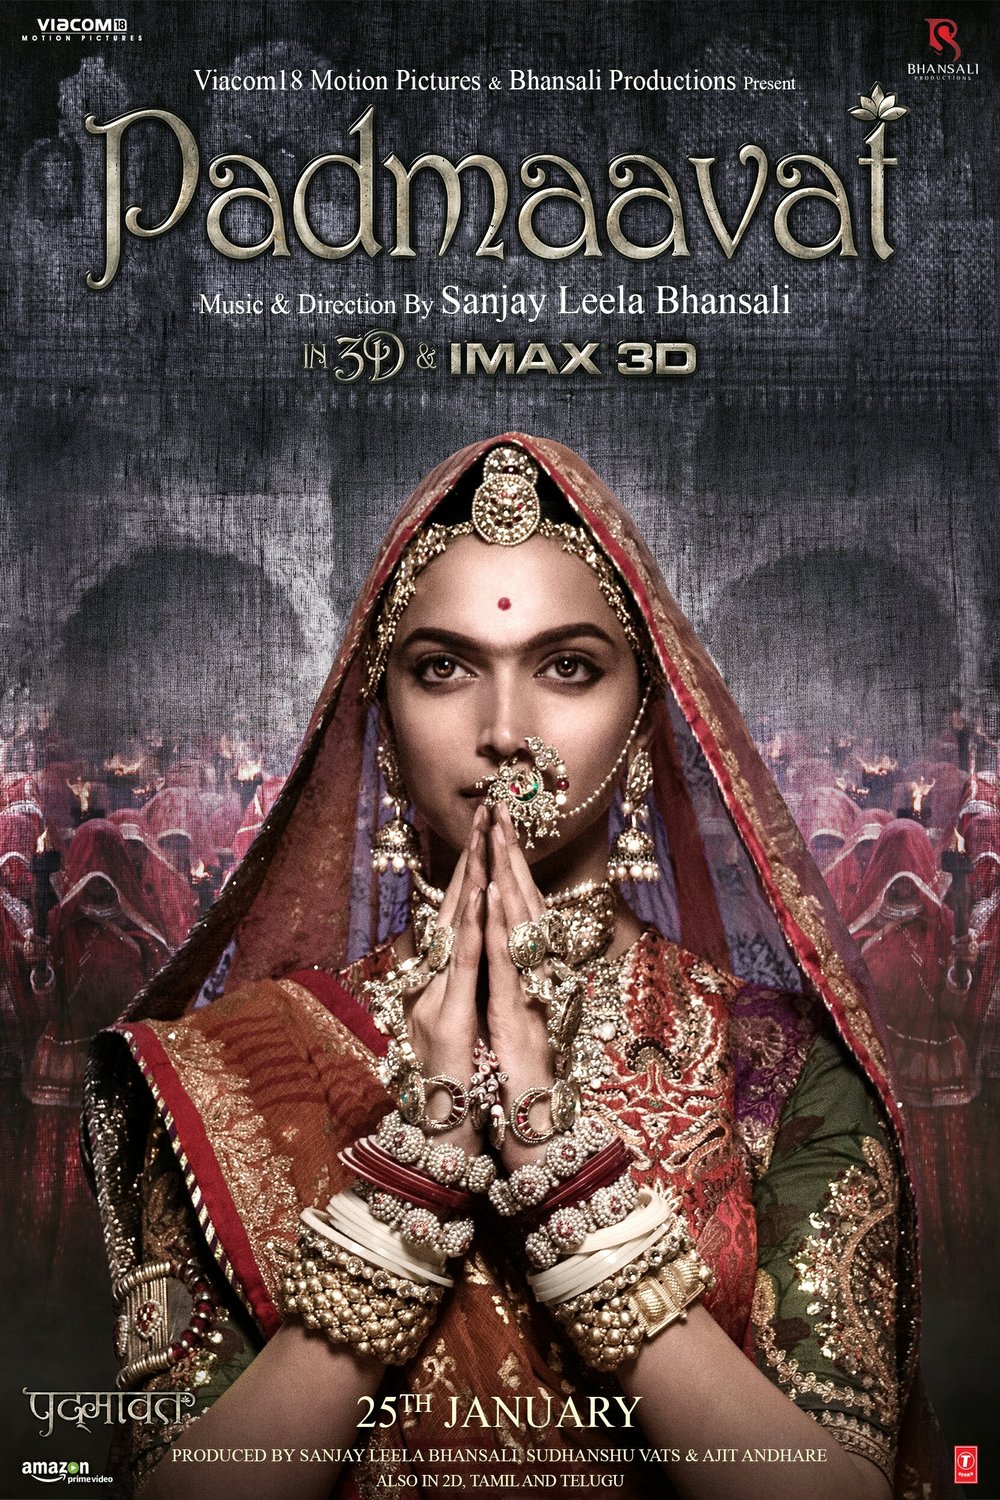 Hindi poster of the movie Padmaavat - Tamil